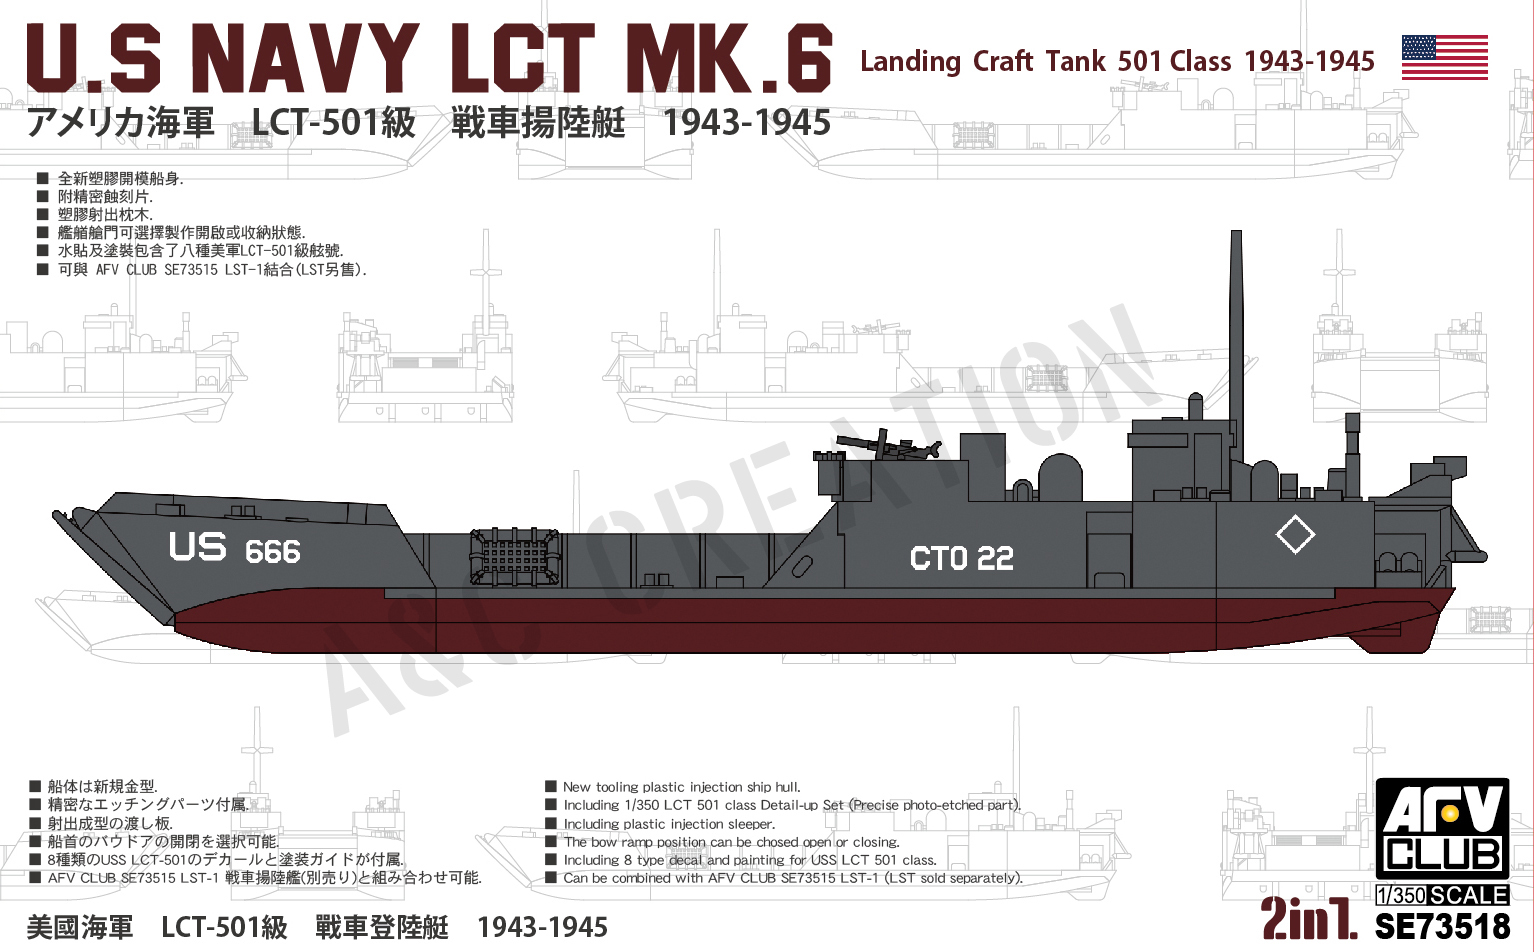 SE73518 US Navy LCT Mk. 6 LCT 501 Class 1943-1945